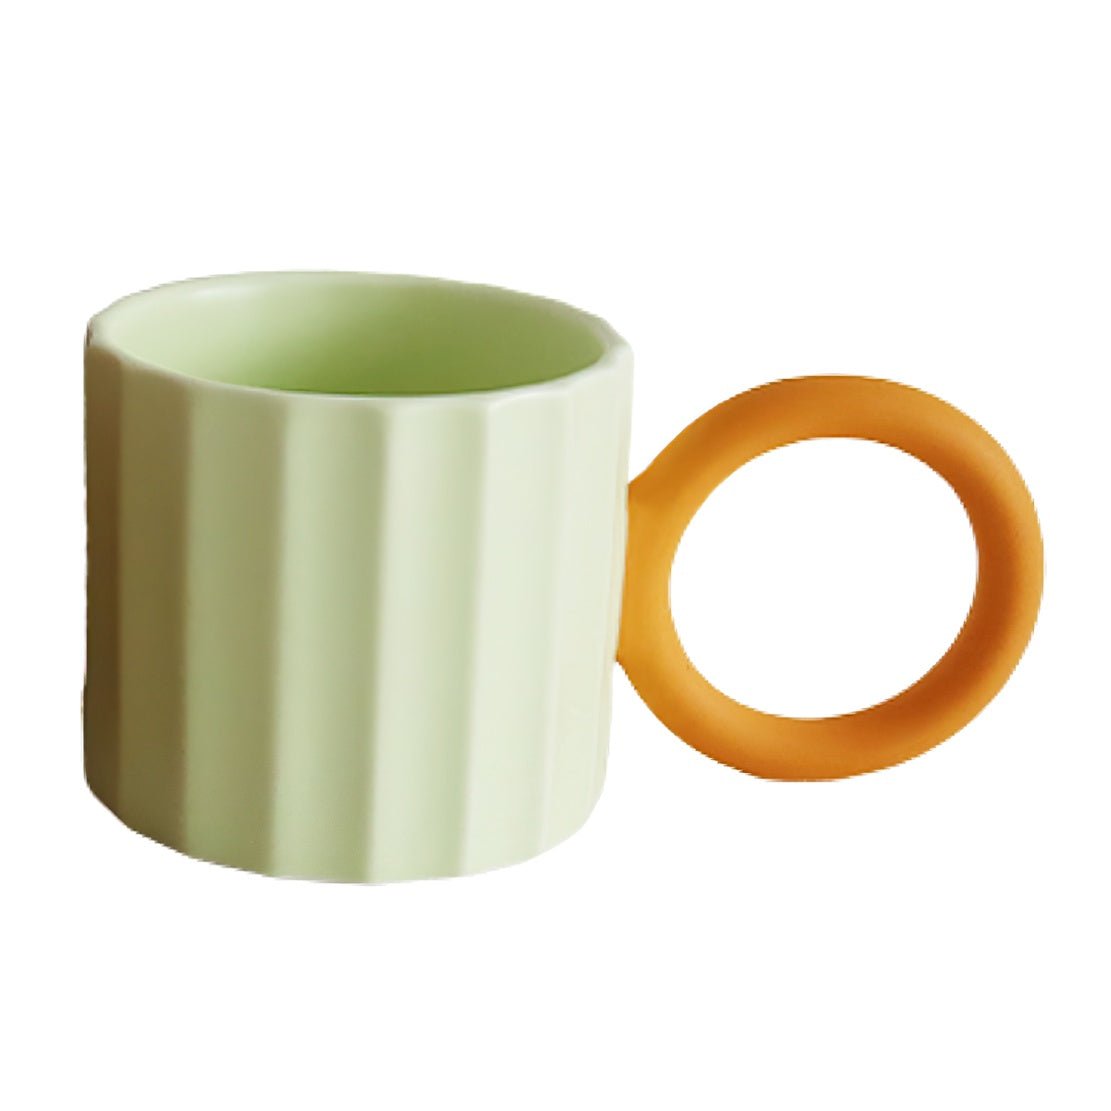 Green ceramic mug with a large, orange circle handle